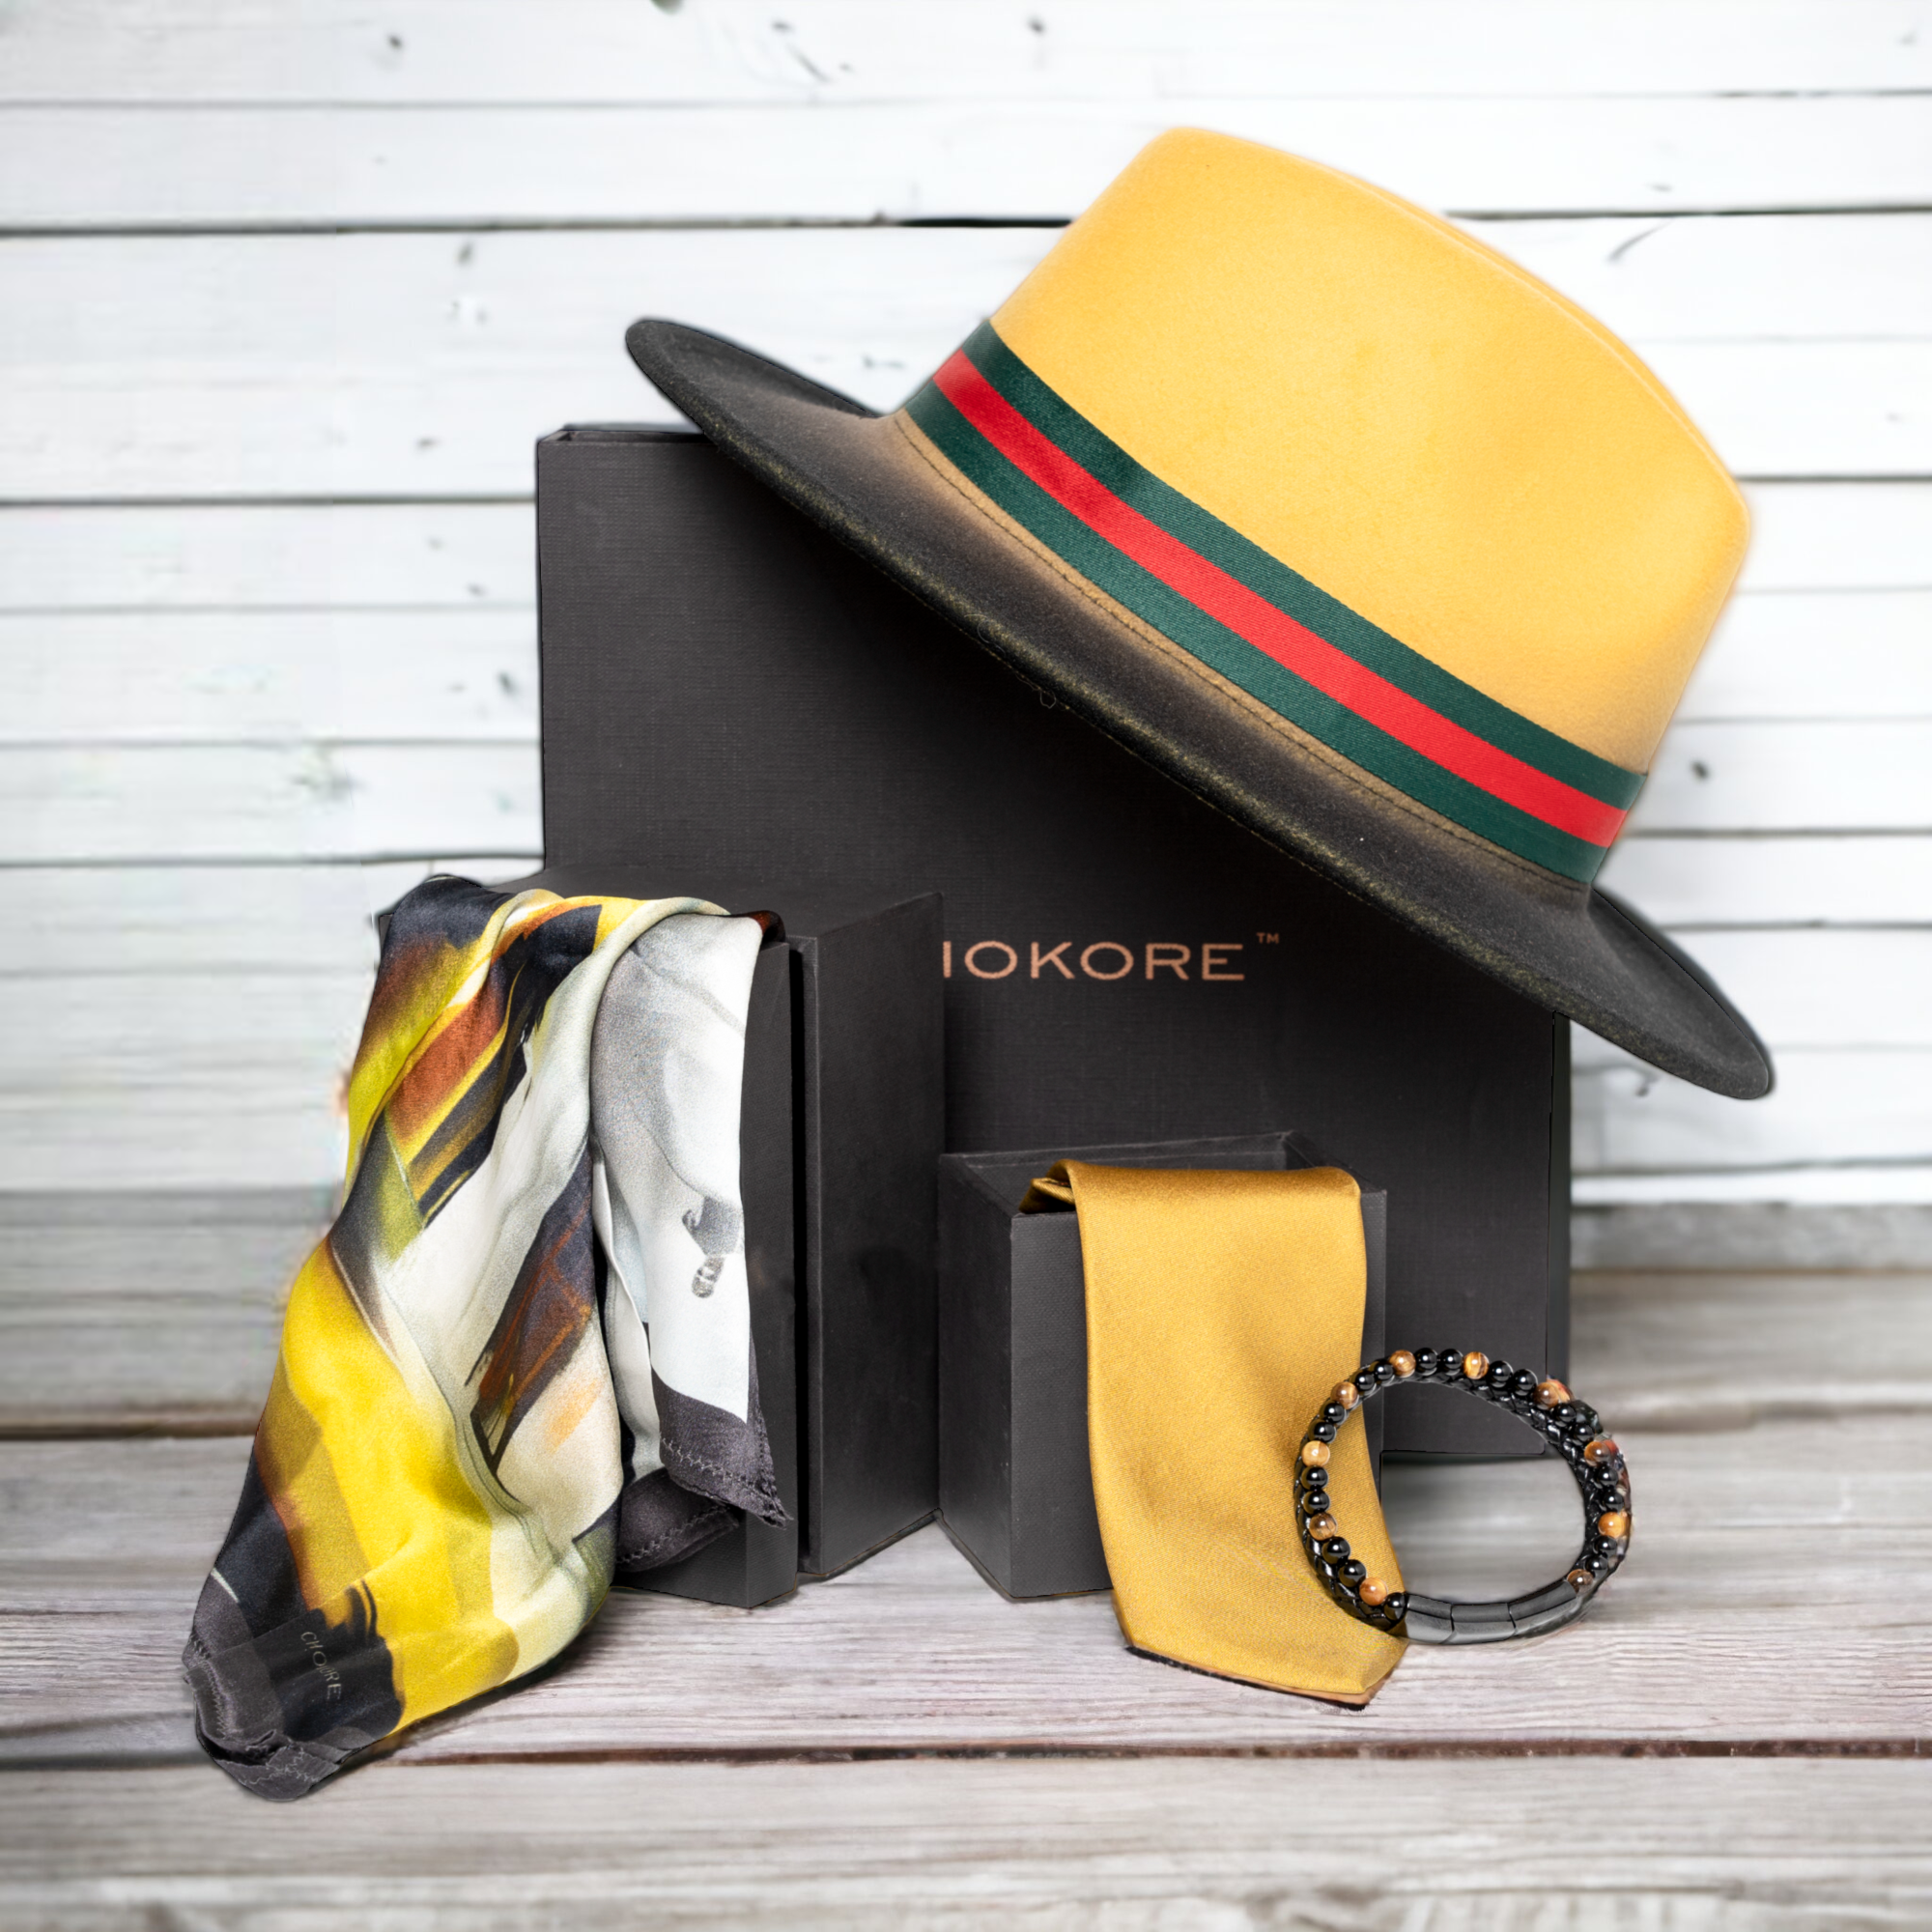 Chokore Special 4-in-1 Gift Set for Him (Chokore Arte Pocket Square, Solid Necktie, Hat, & Bracelet)